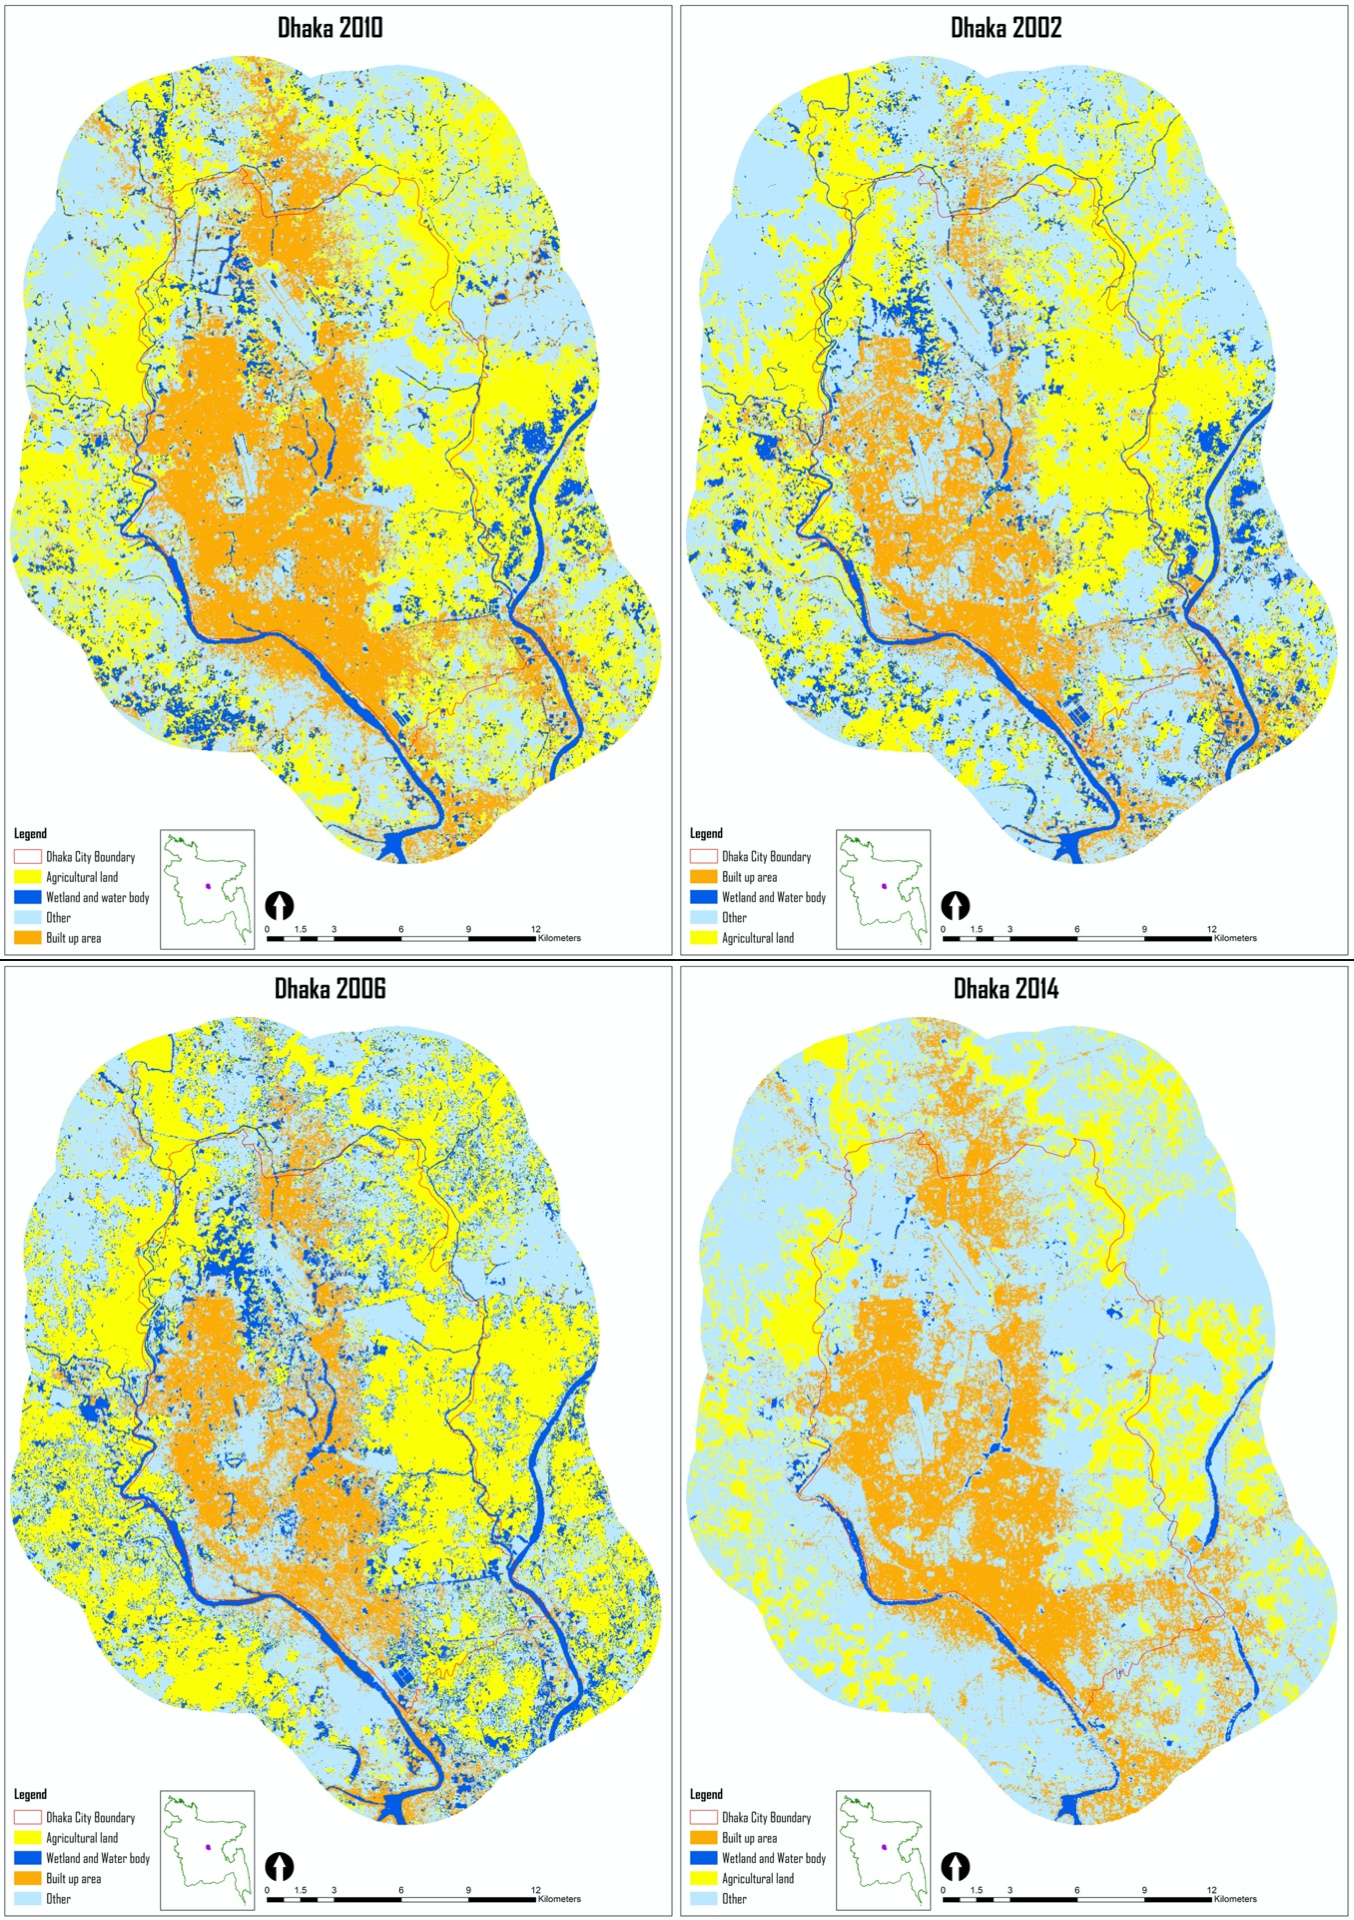 Spatial pattern of farmland loss of Dhaka city